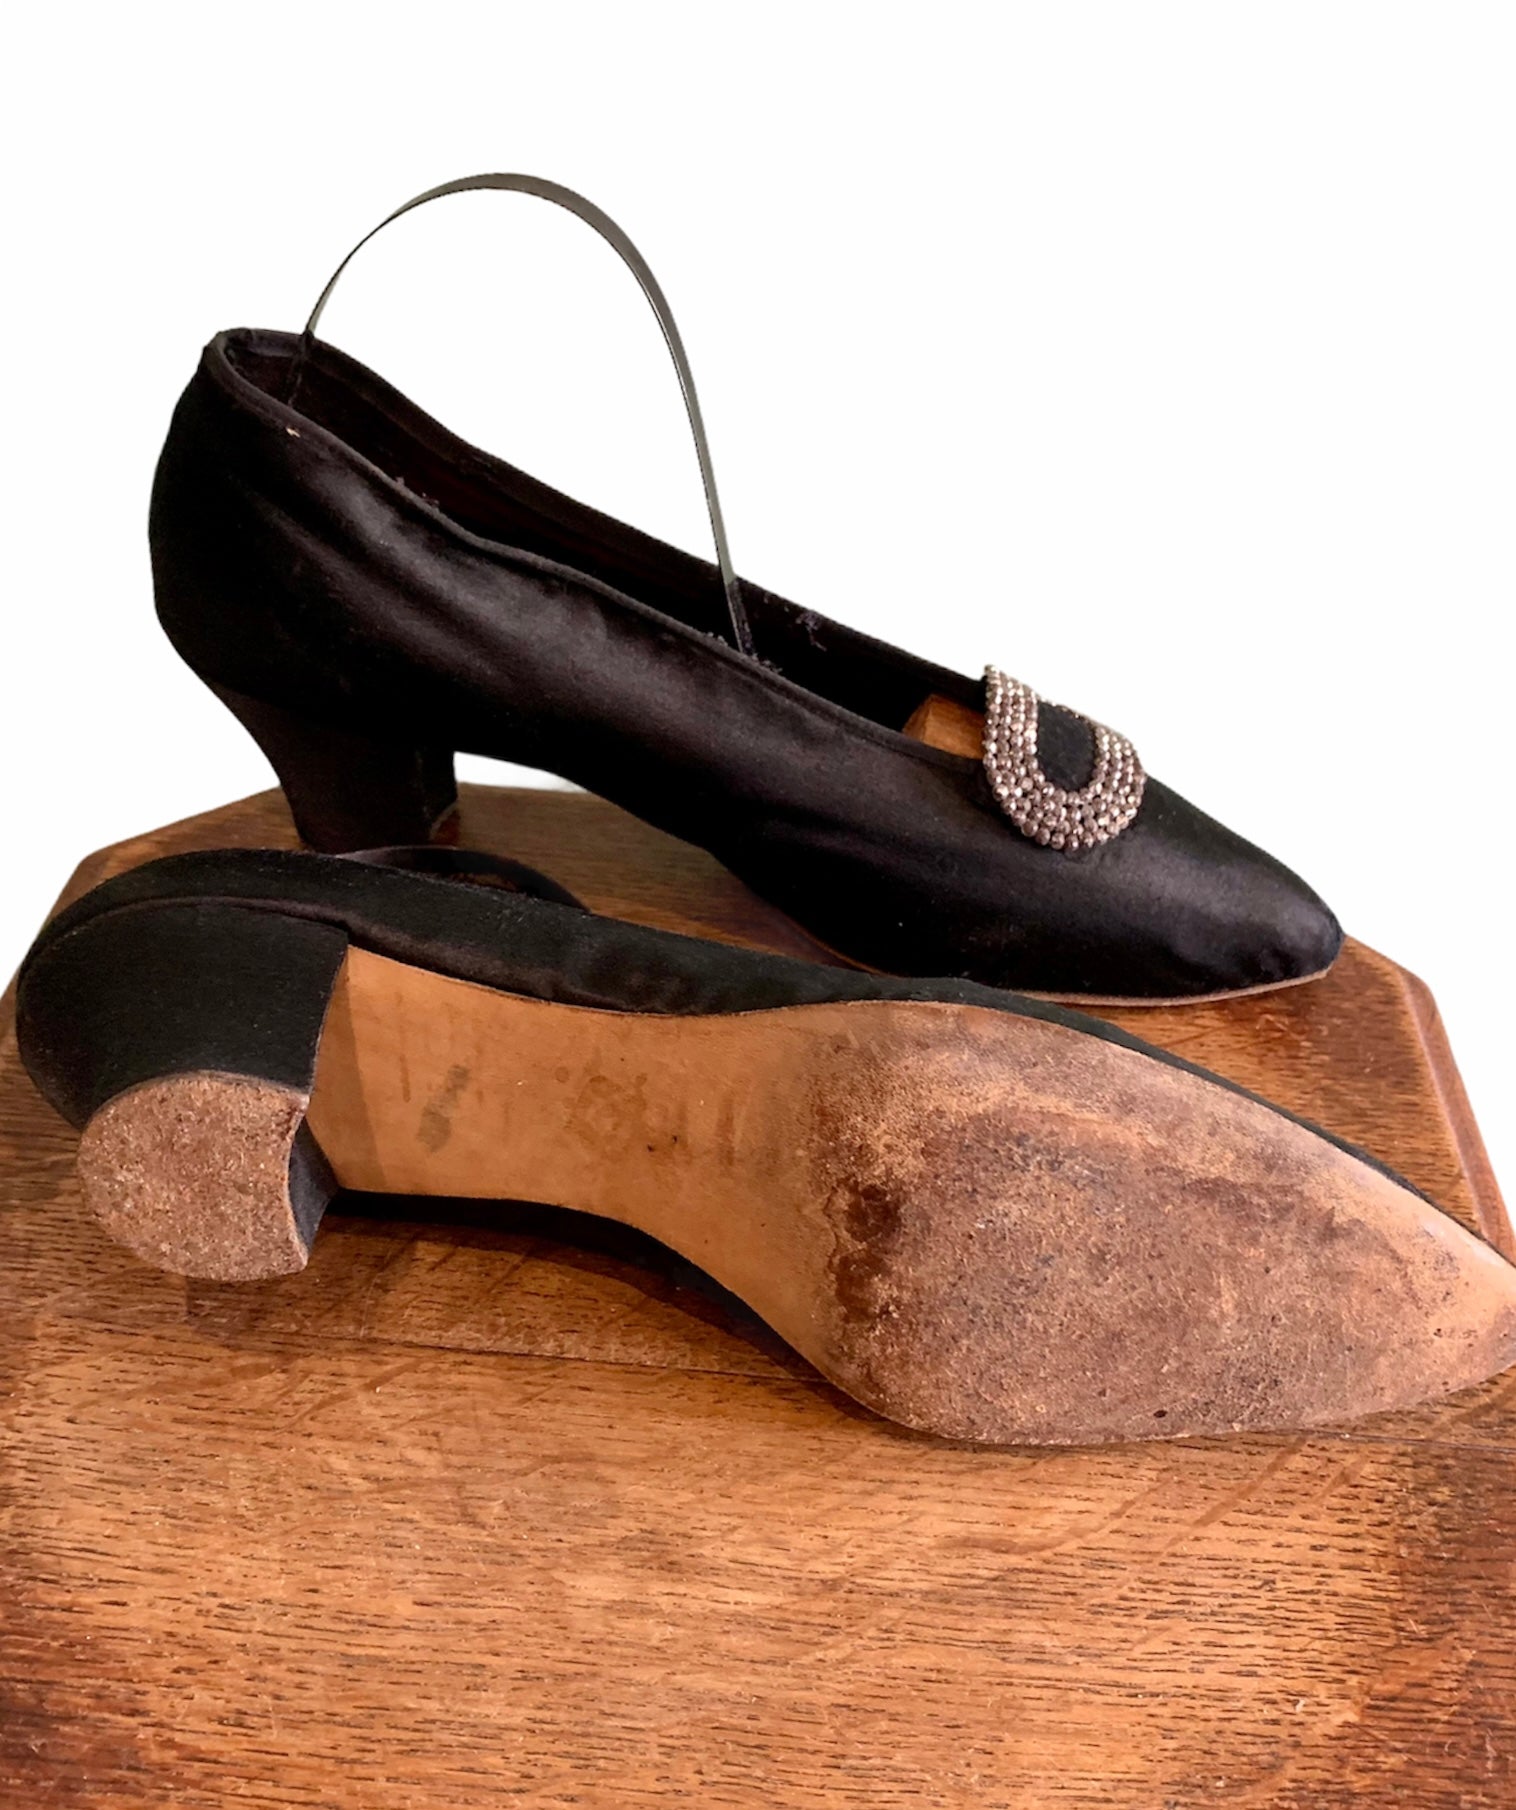 Chaussures Années 20 - Retro Verso